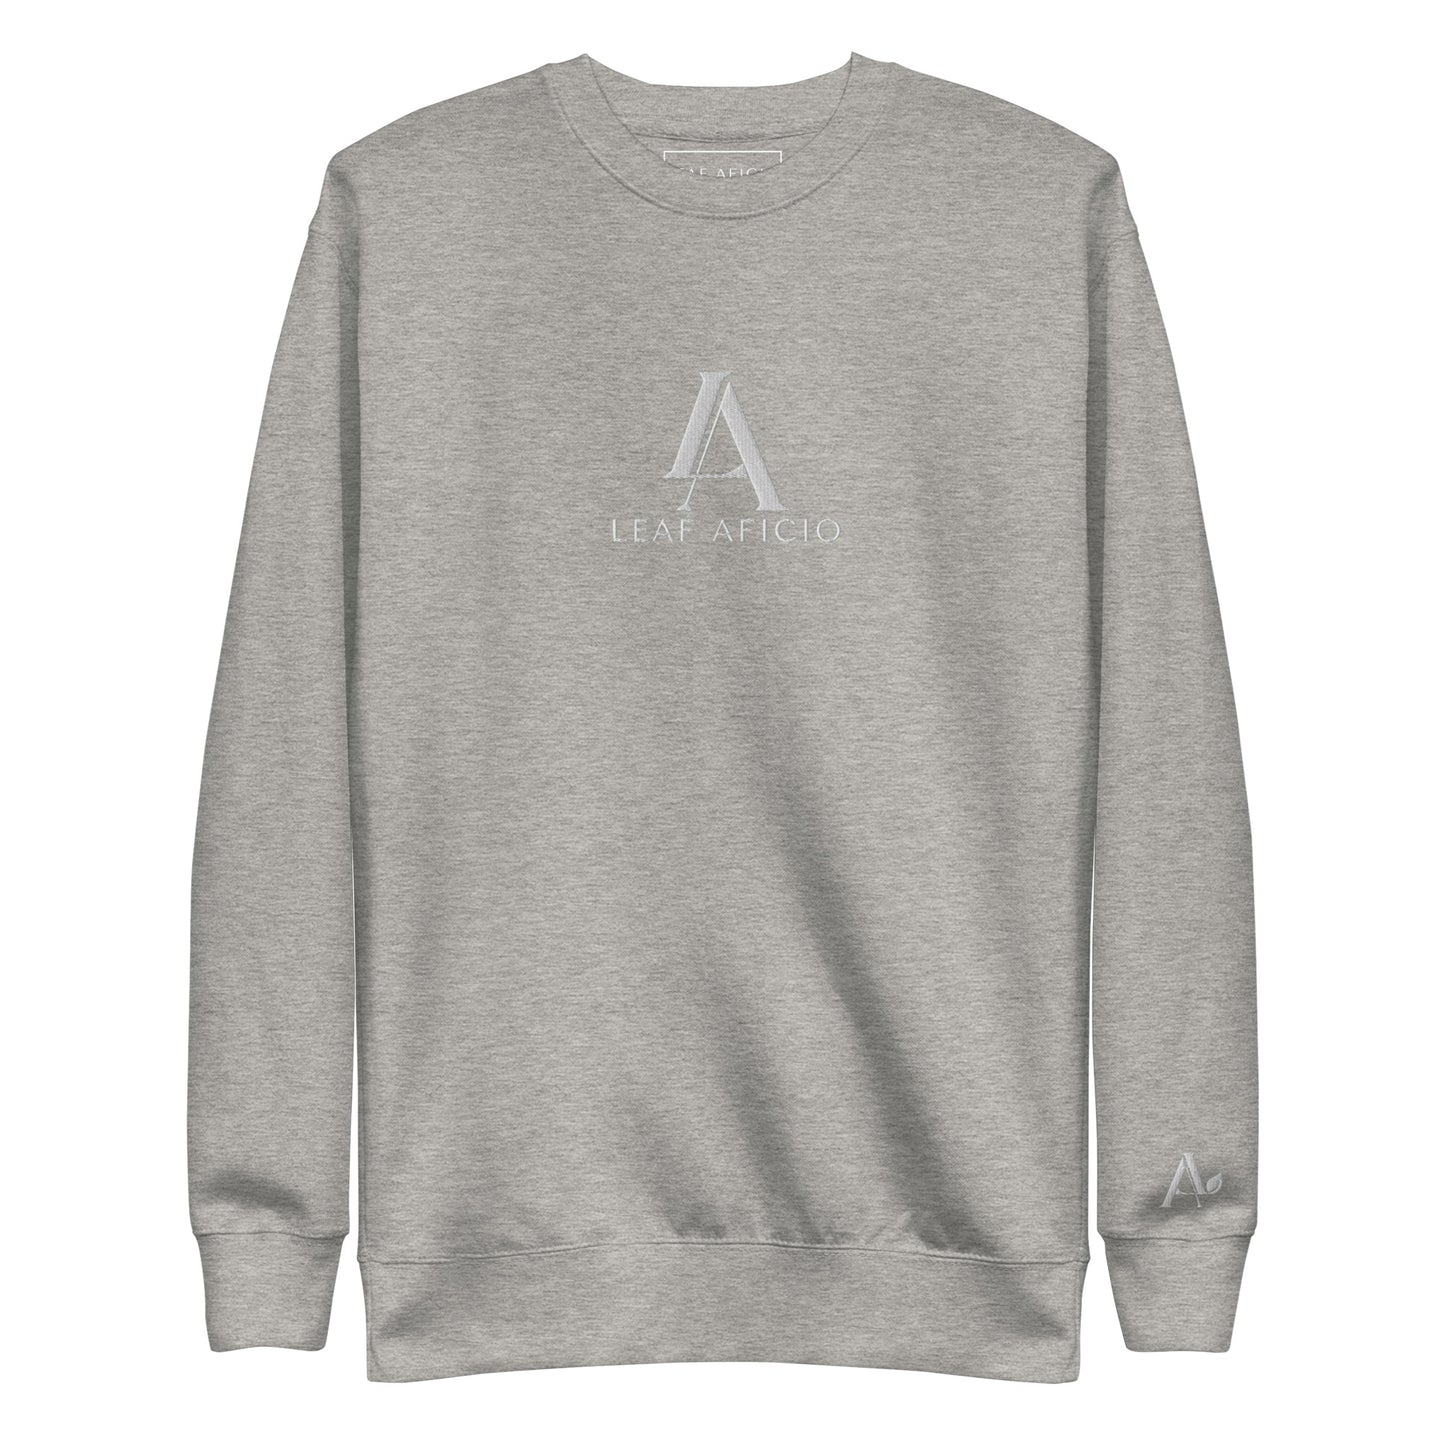 Leaf Aficio Logo Embroidered Unisex Premium Sweatshirt